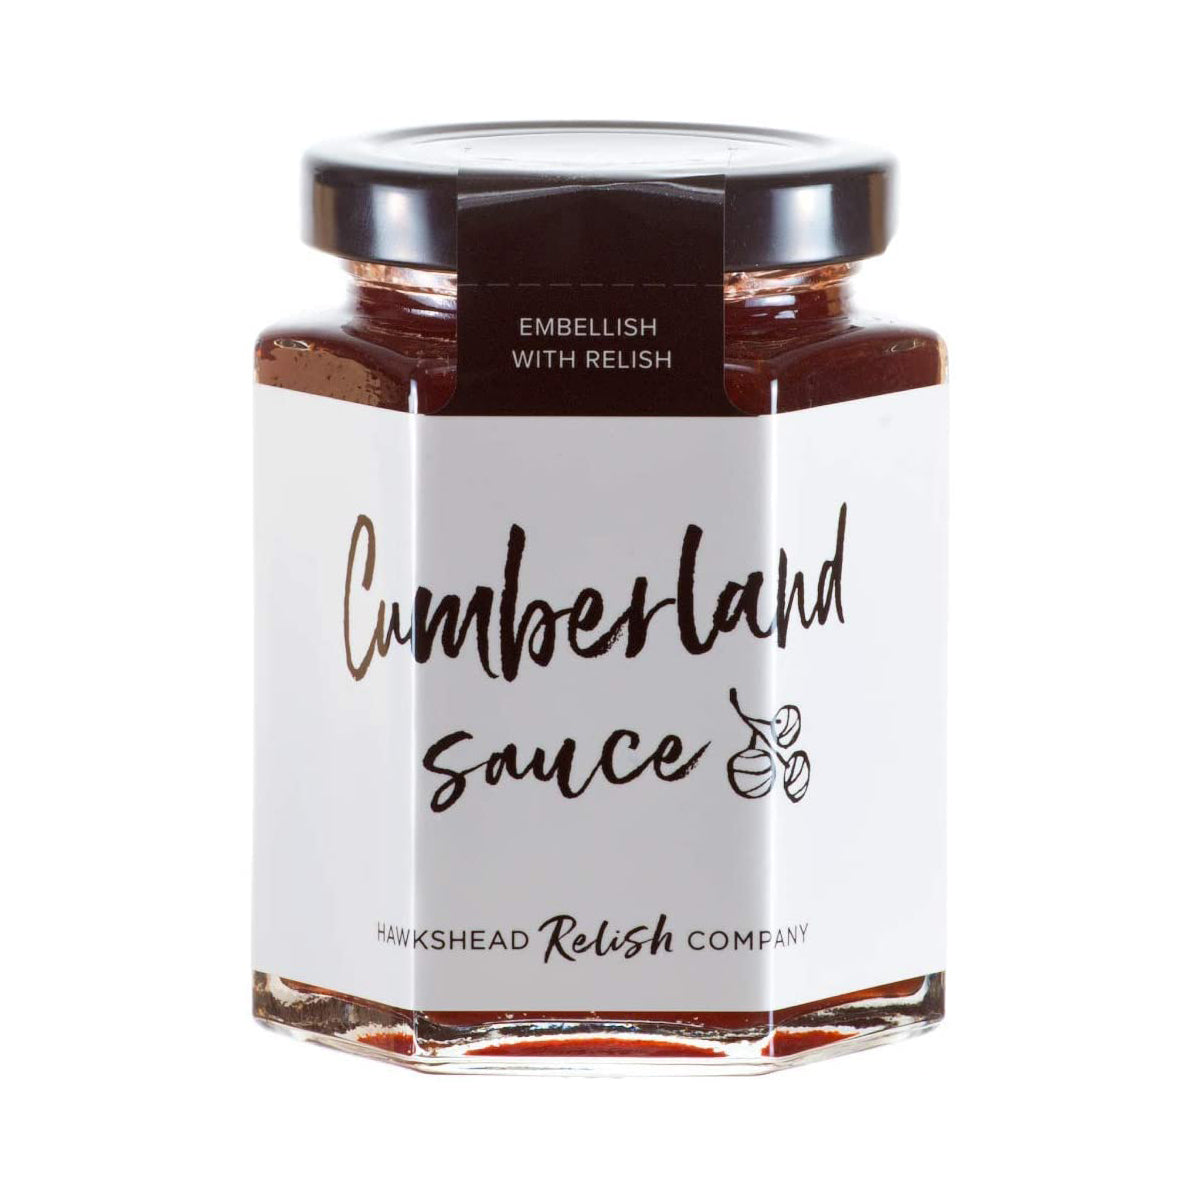 Hawkshead Relish Cumberland Sauce - 230g